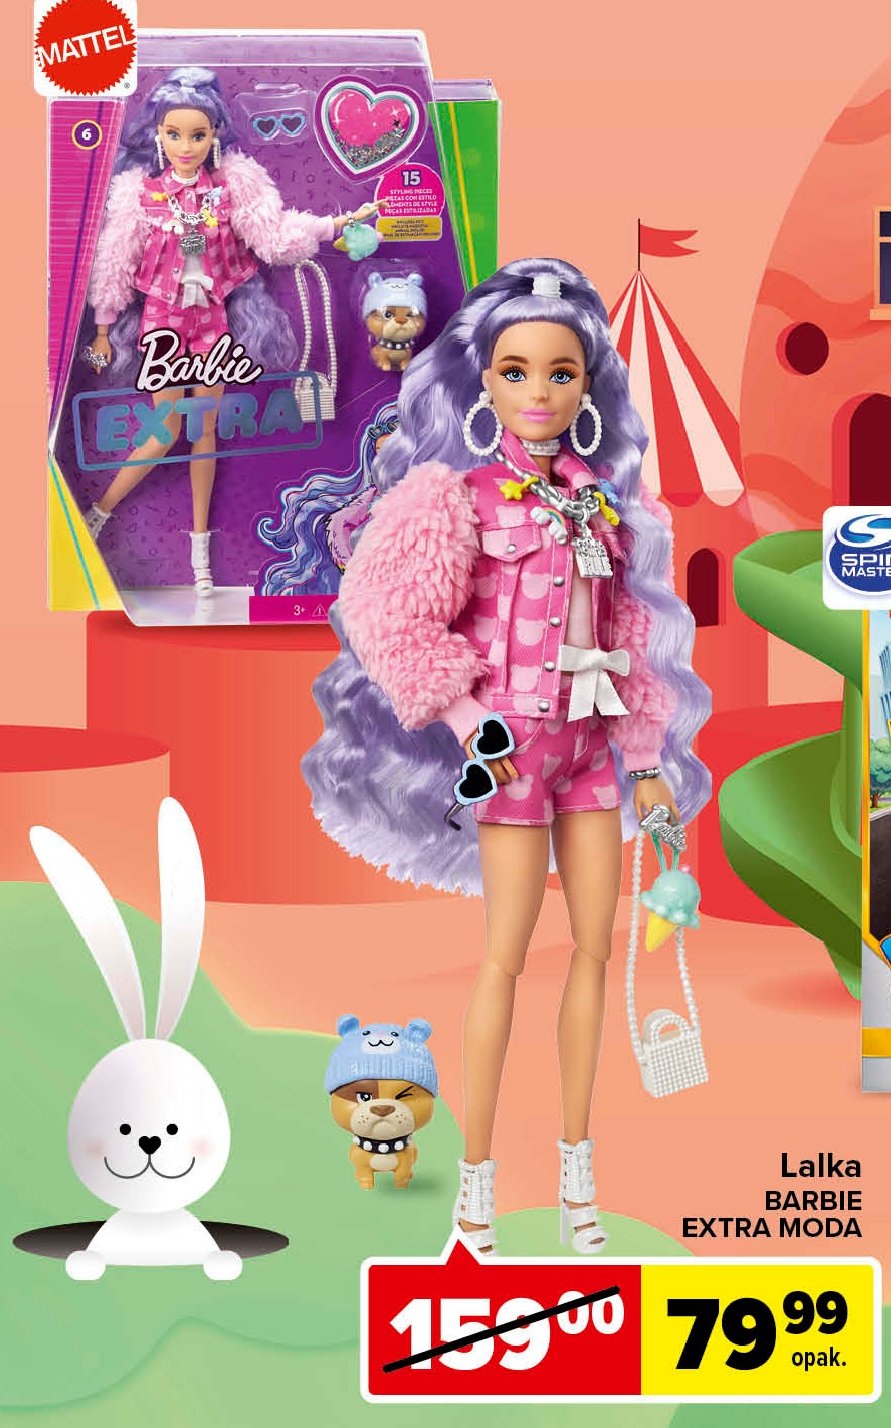 Lalka barbie extra moda deluxe Mattel promocja